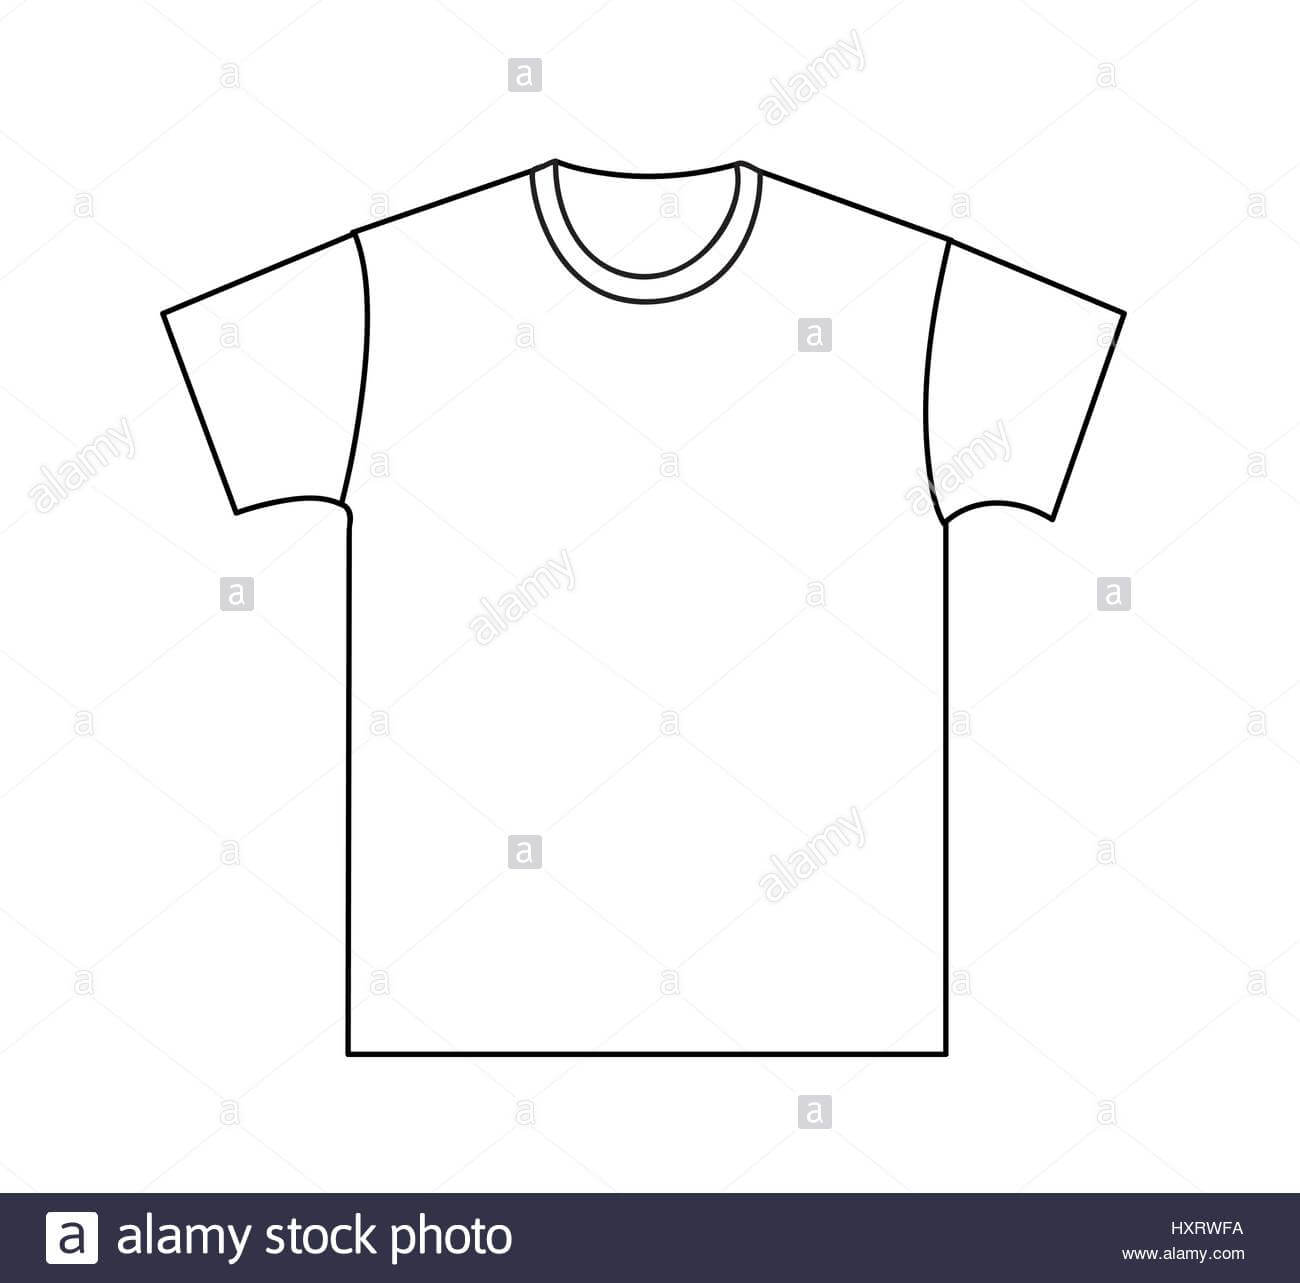 Blank T Shirt Template Stock Vector Art & Illustration Inside Blank Tee Shirt Template